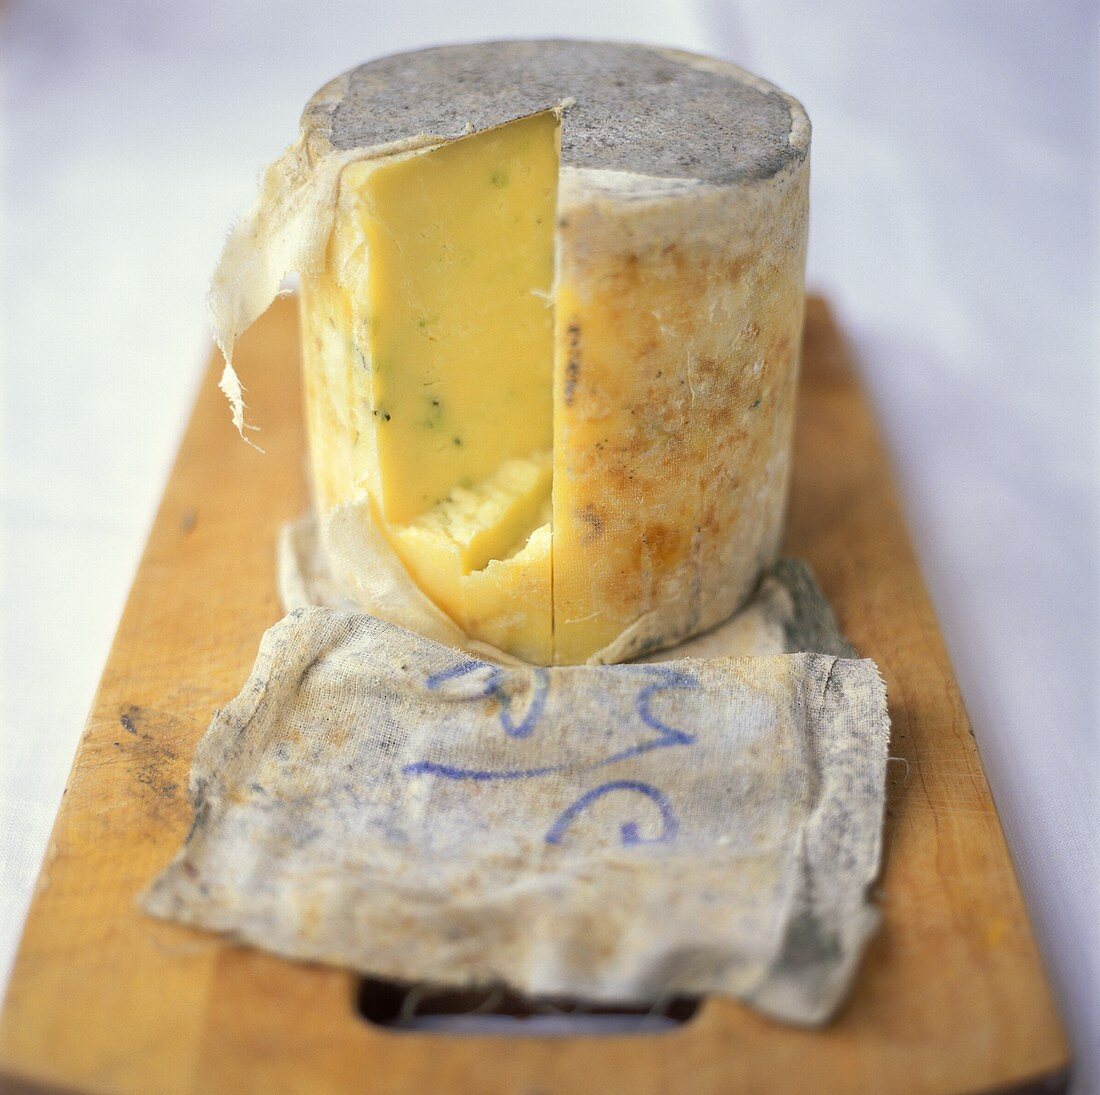 Hard English cheese